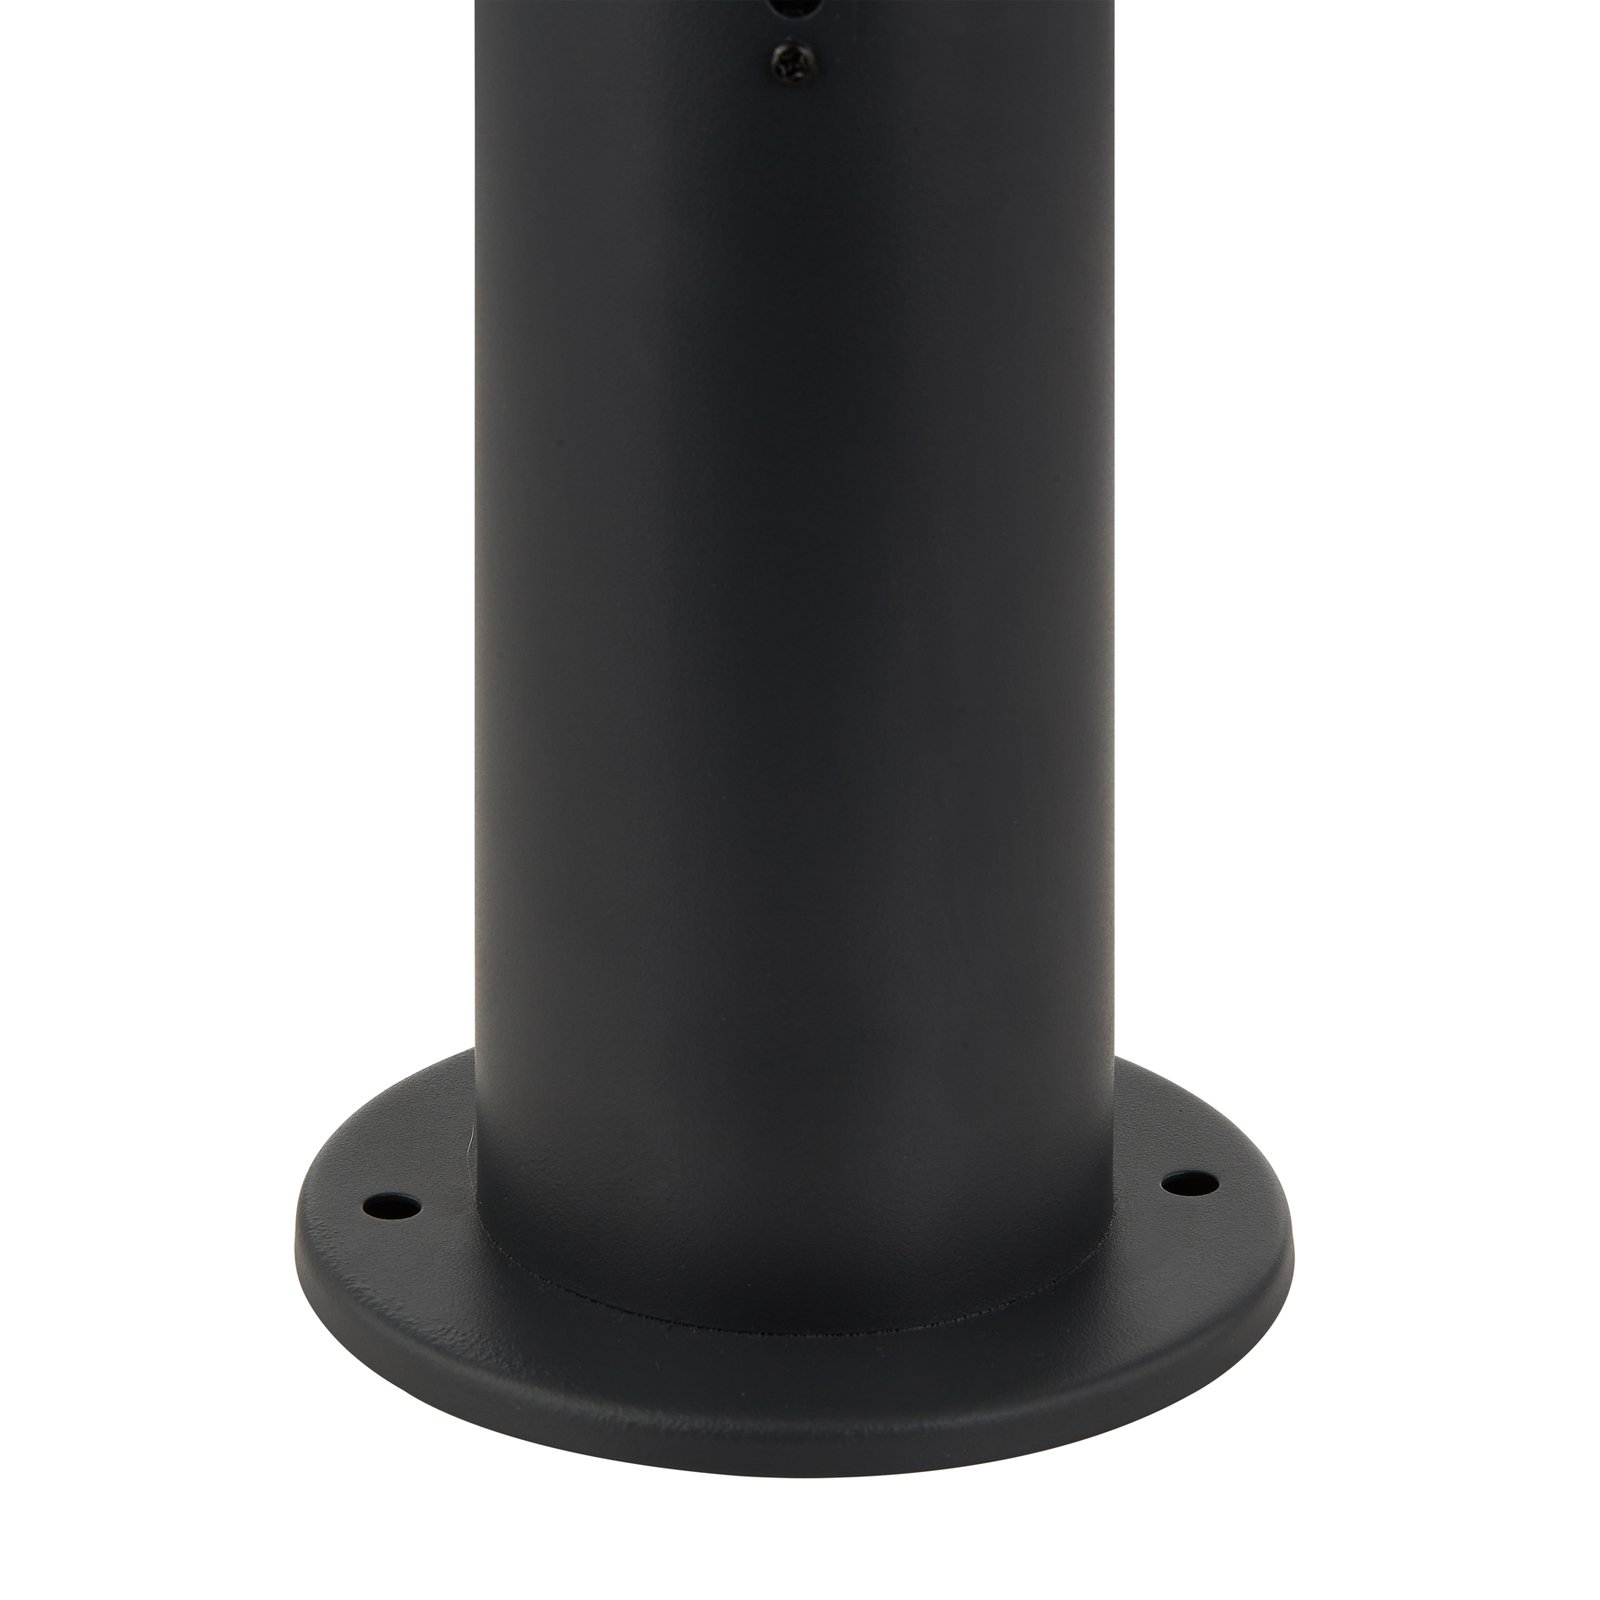 Lindby Statius pillar lamp, black, iron, 45 cm